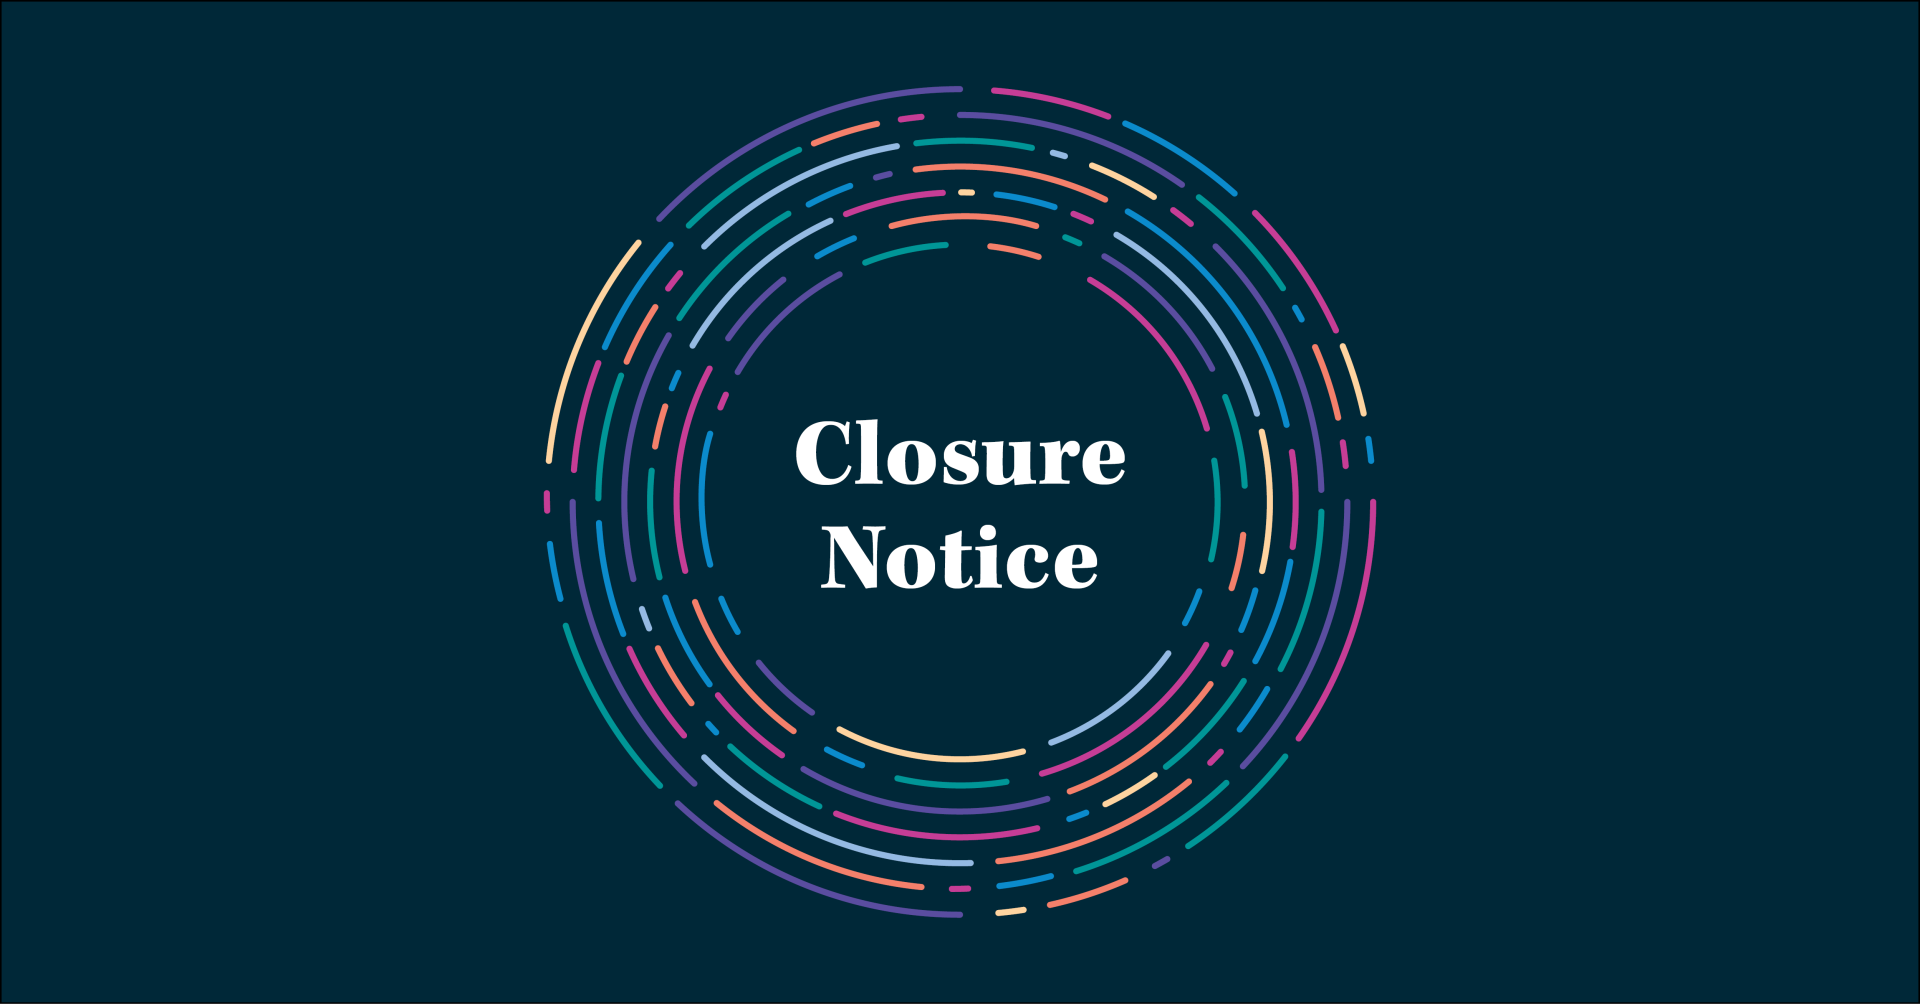 Notice of Temporary Closure of the Matt Dann Theatre and Cinema